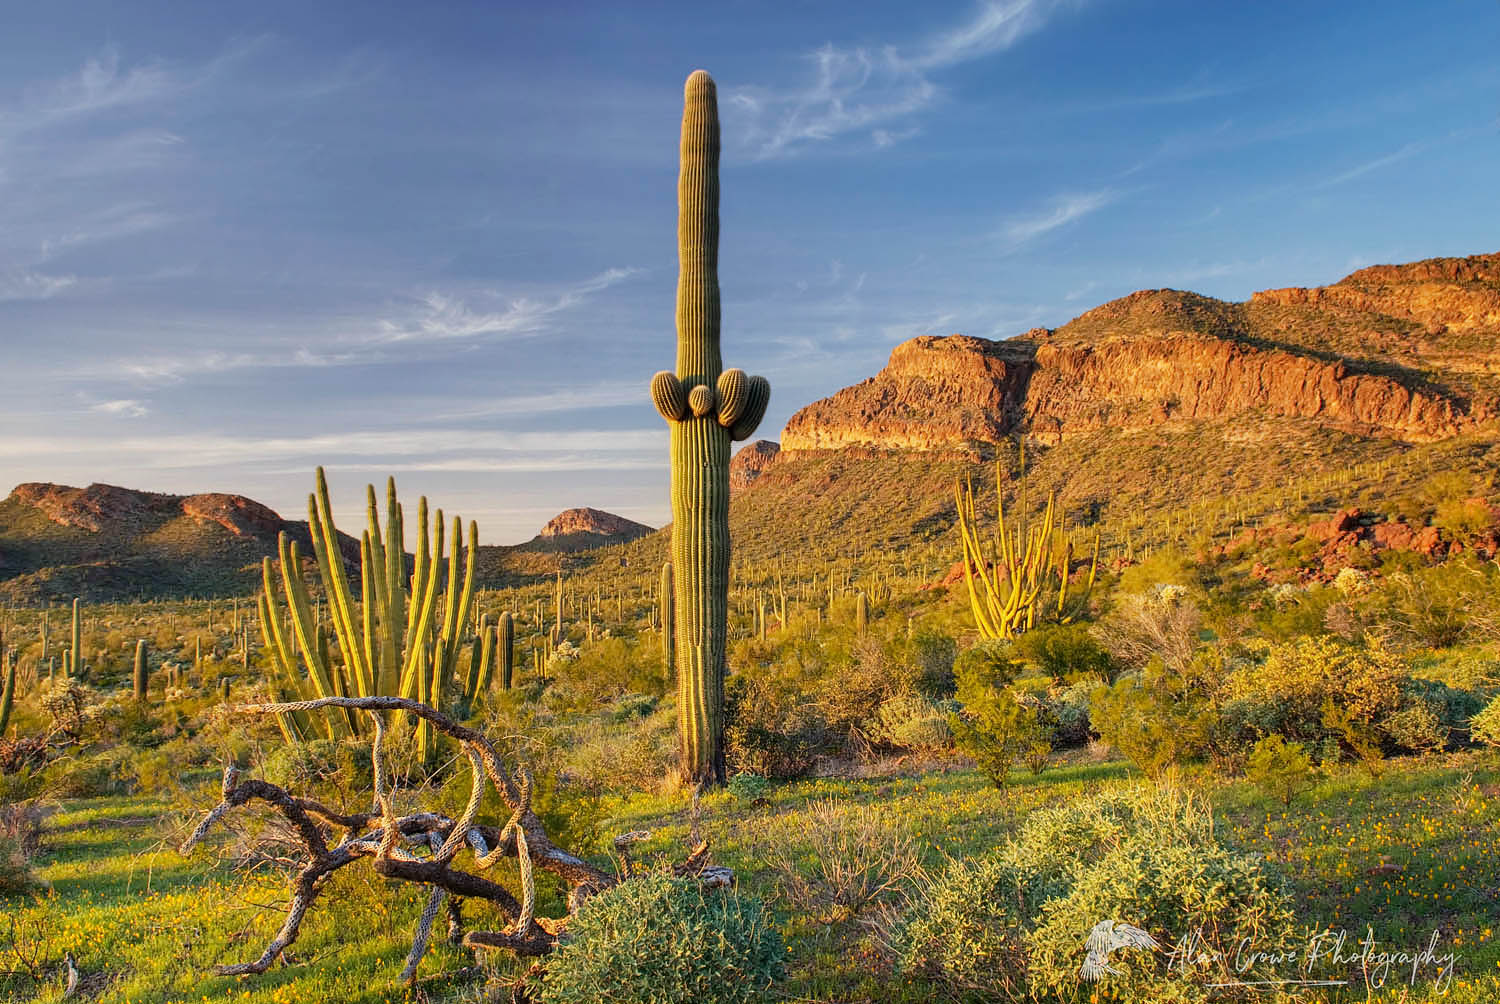 Saguaro Cactus (Carnegiea gigantea) standing amidst fields of yellow Mexican Poppies, Organ Pipe Cactus National Monument Arizona #35409